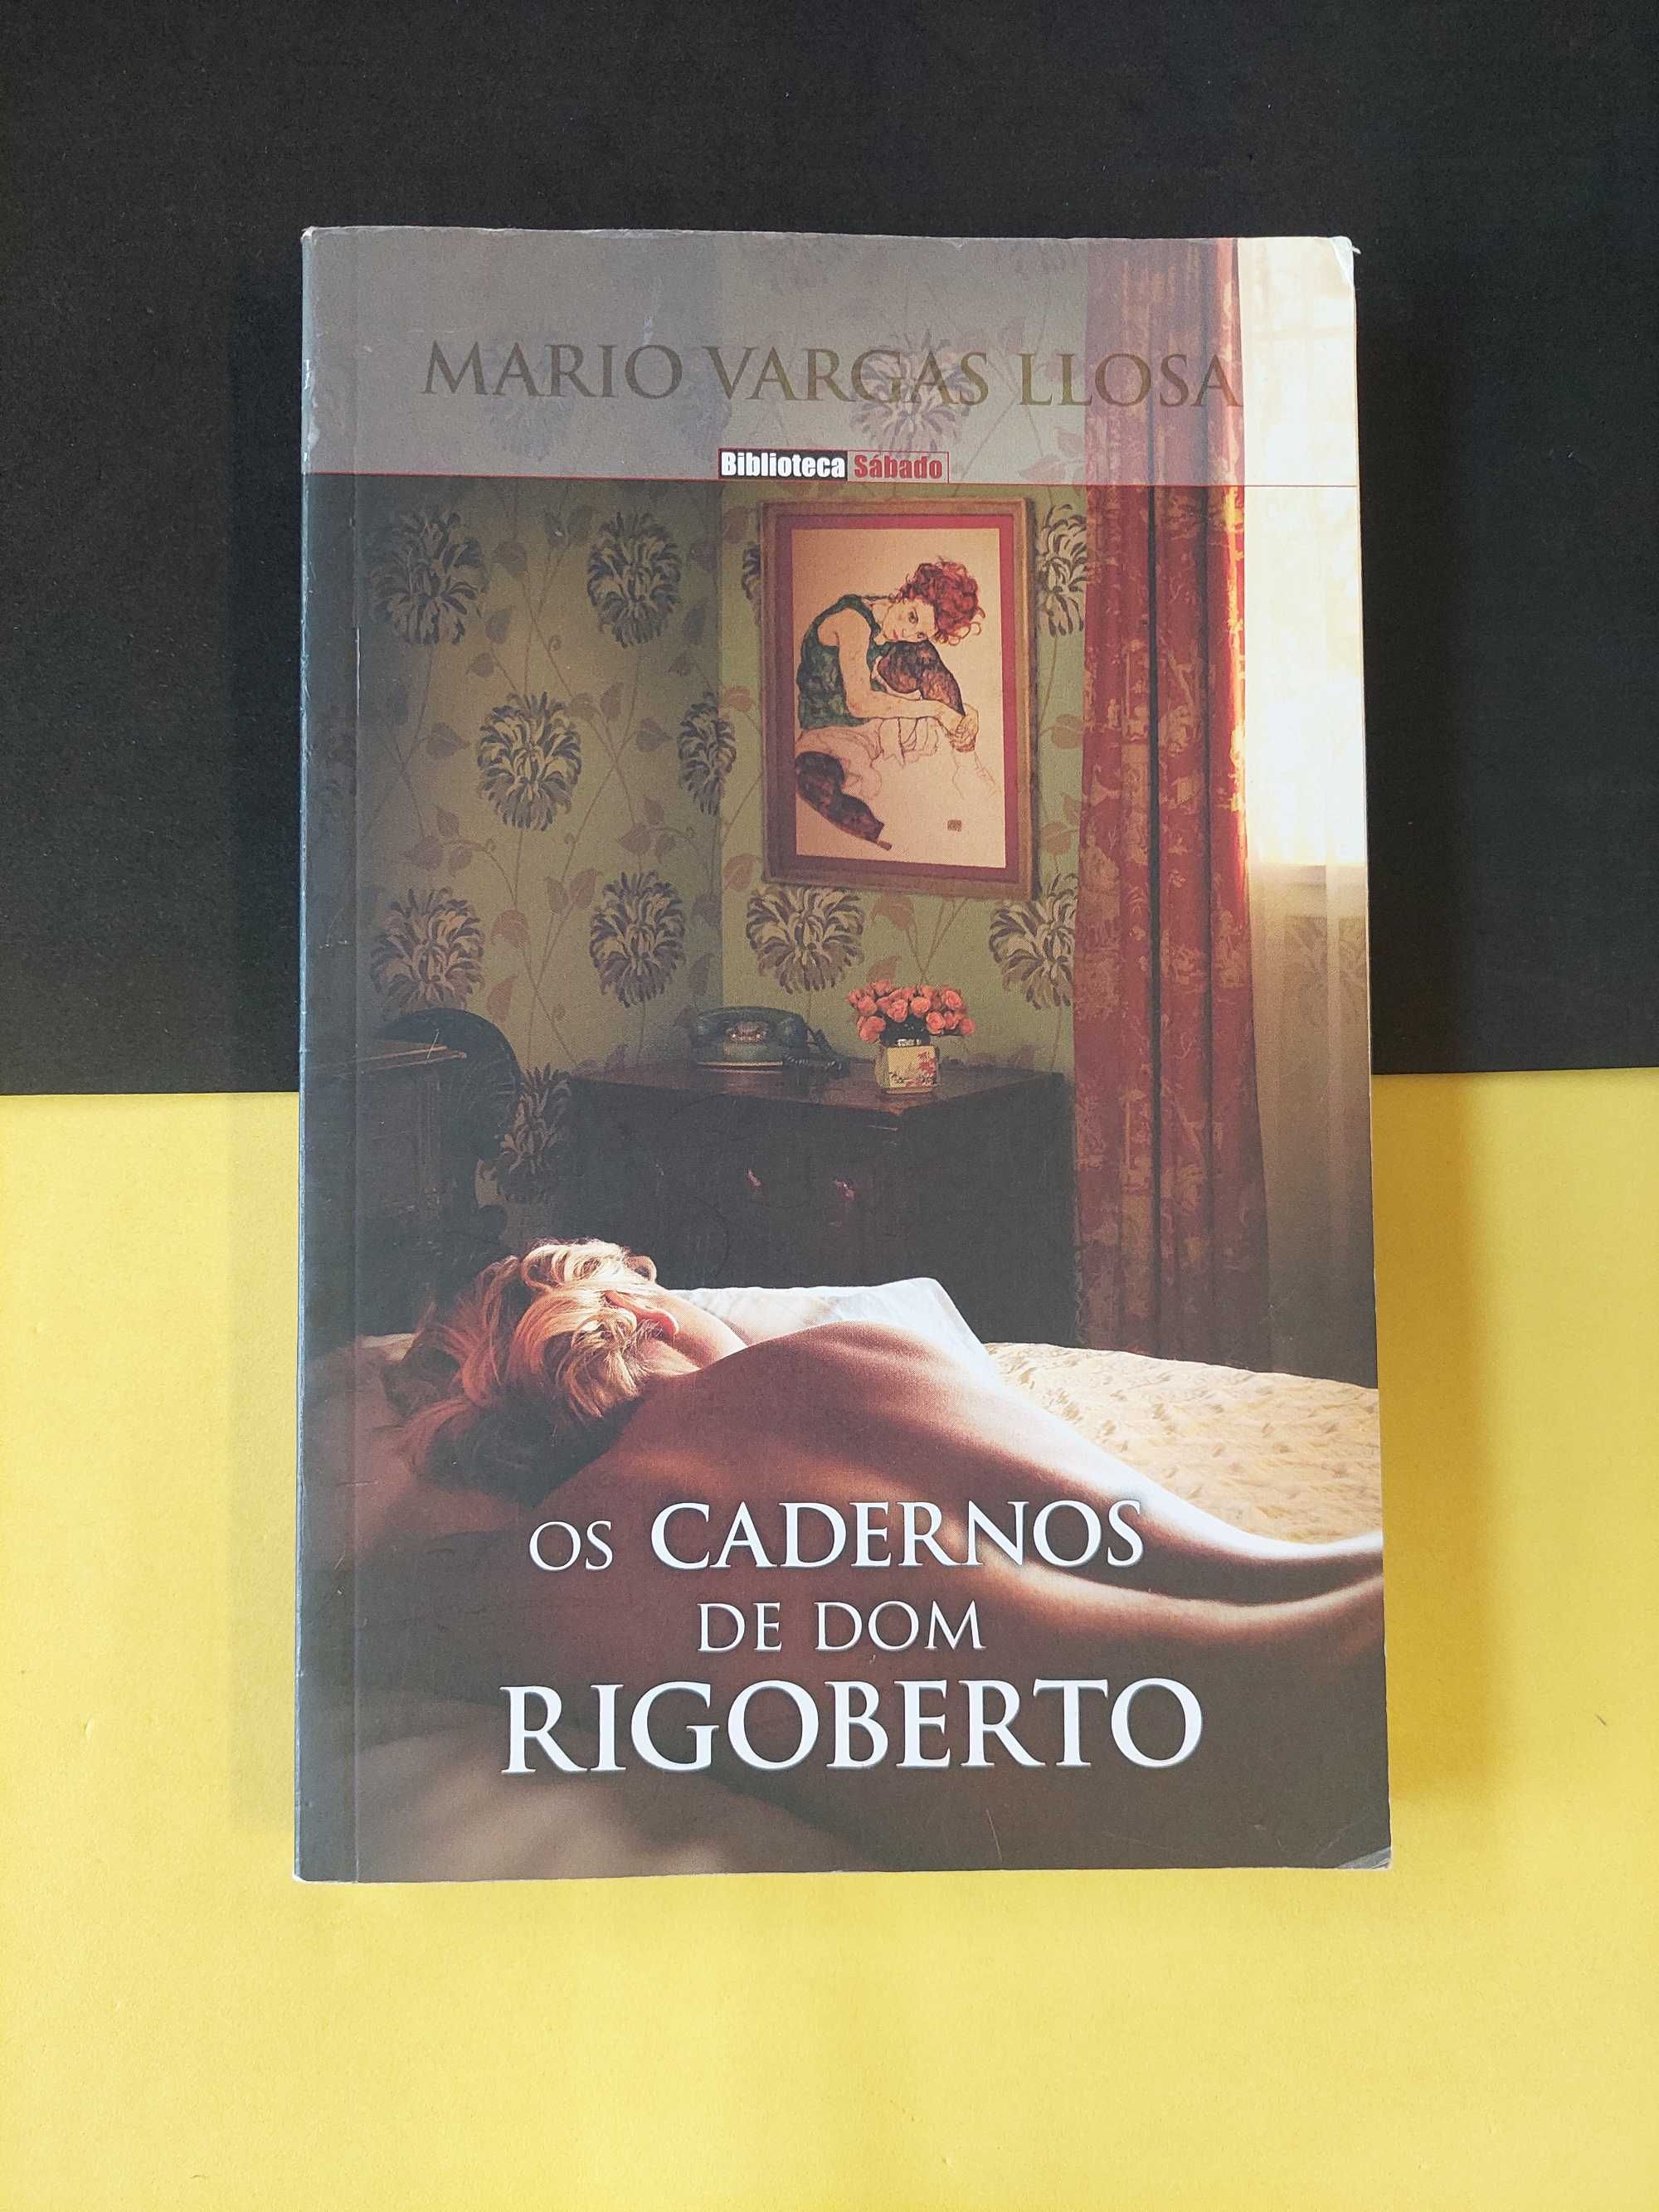 Mario Vargas Llosa - Os cadernos de dom Rigoberto